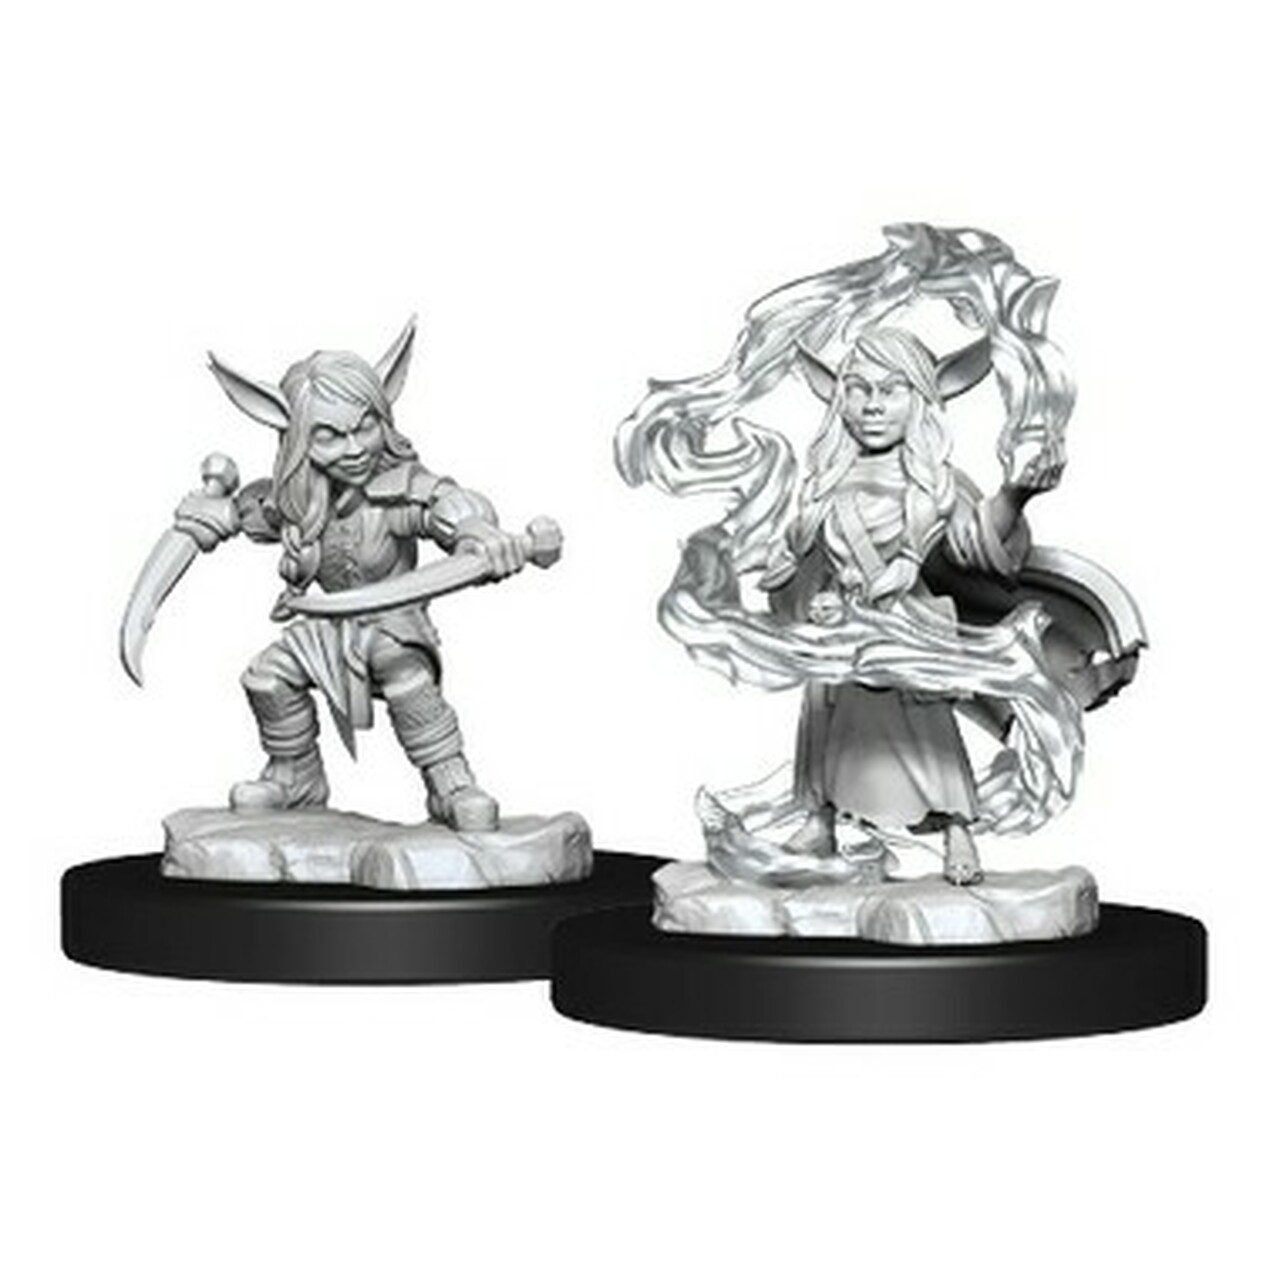 Crit.Role Unpainted miniatures: Goblin Sorceror and Rogue Female